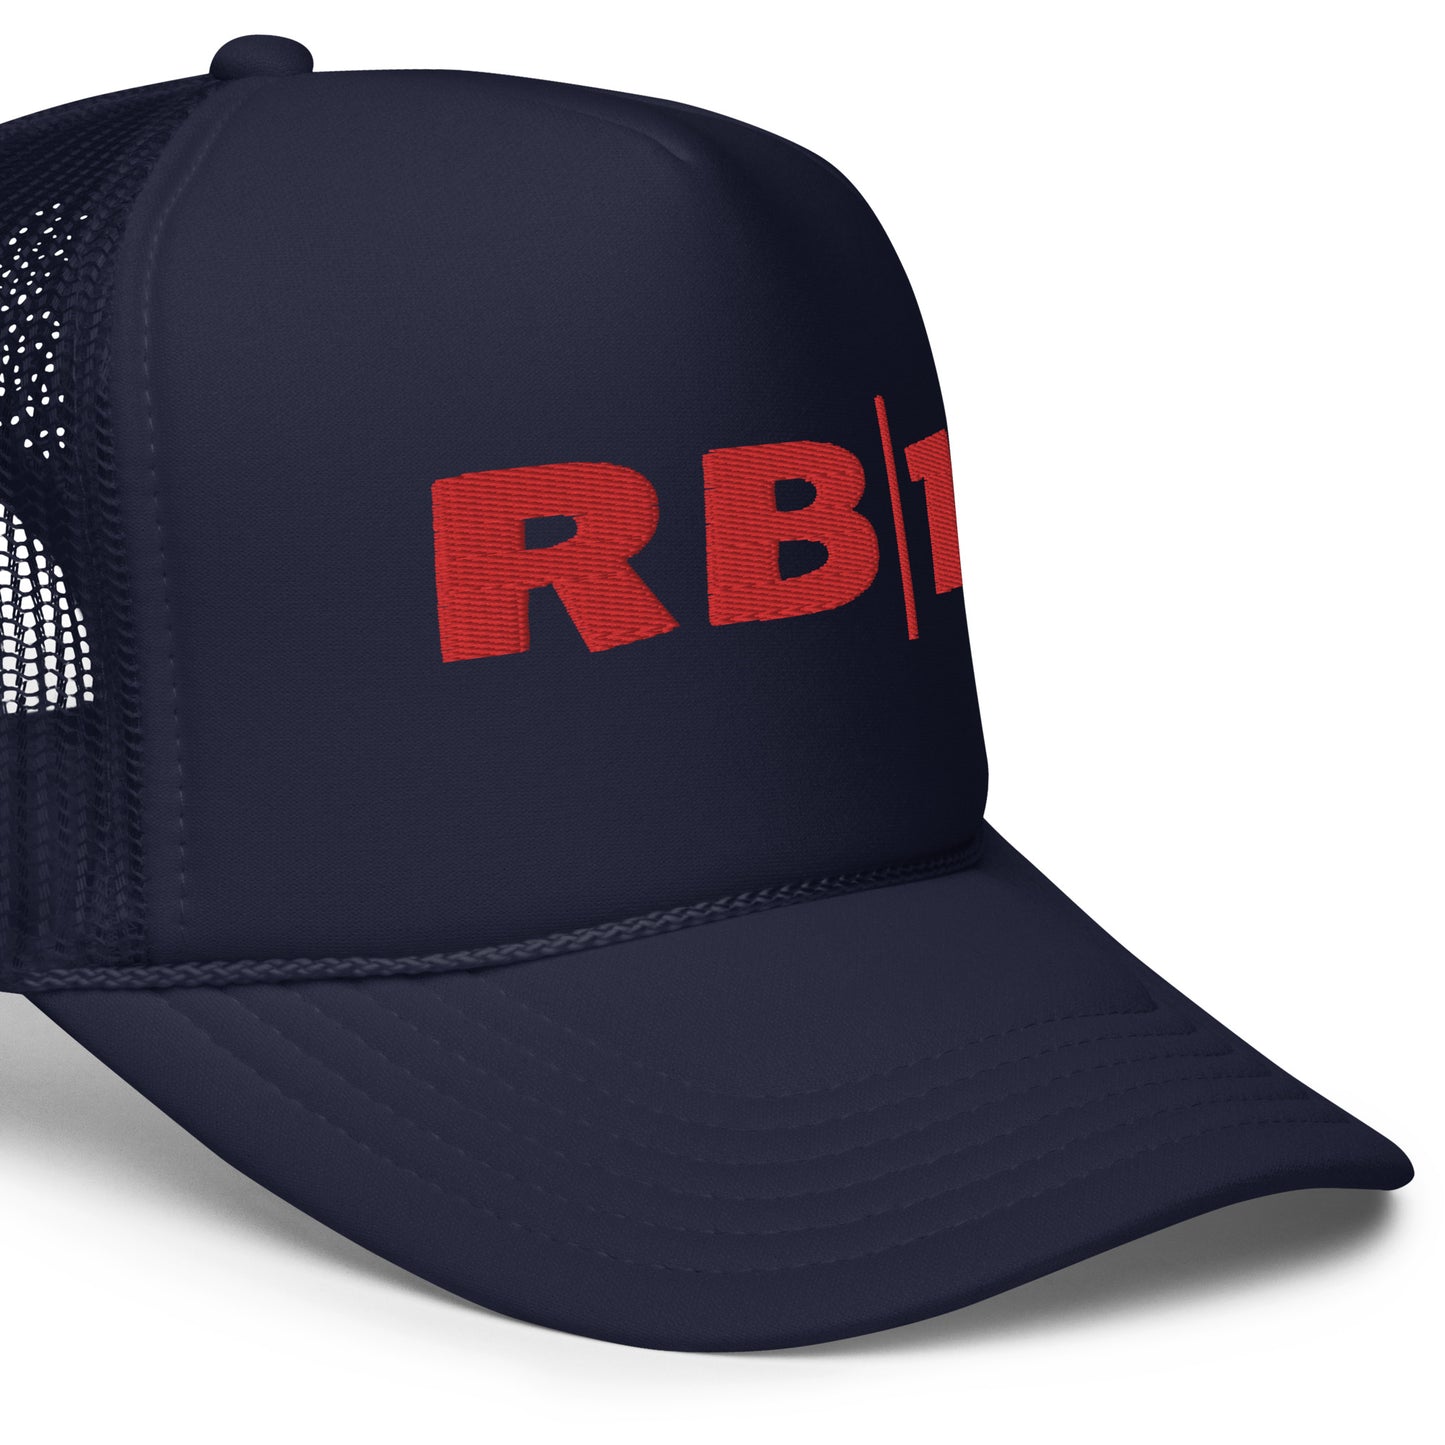 RBA - "RB|1" Hat Red Logo